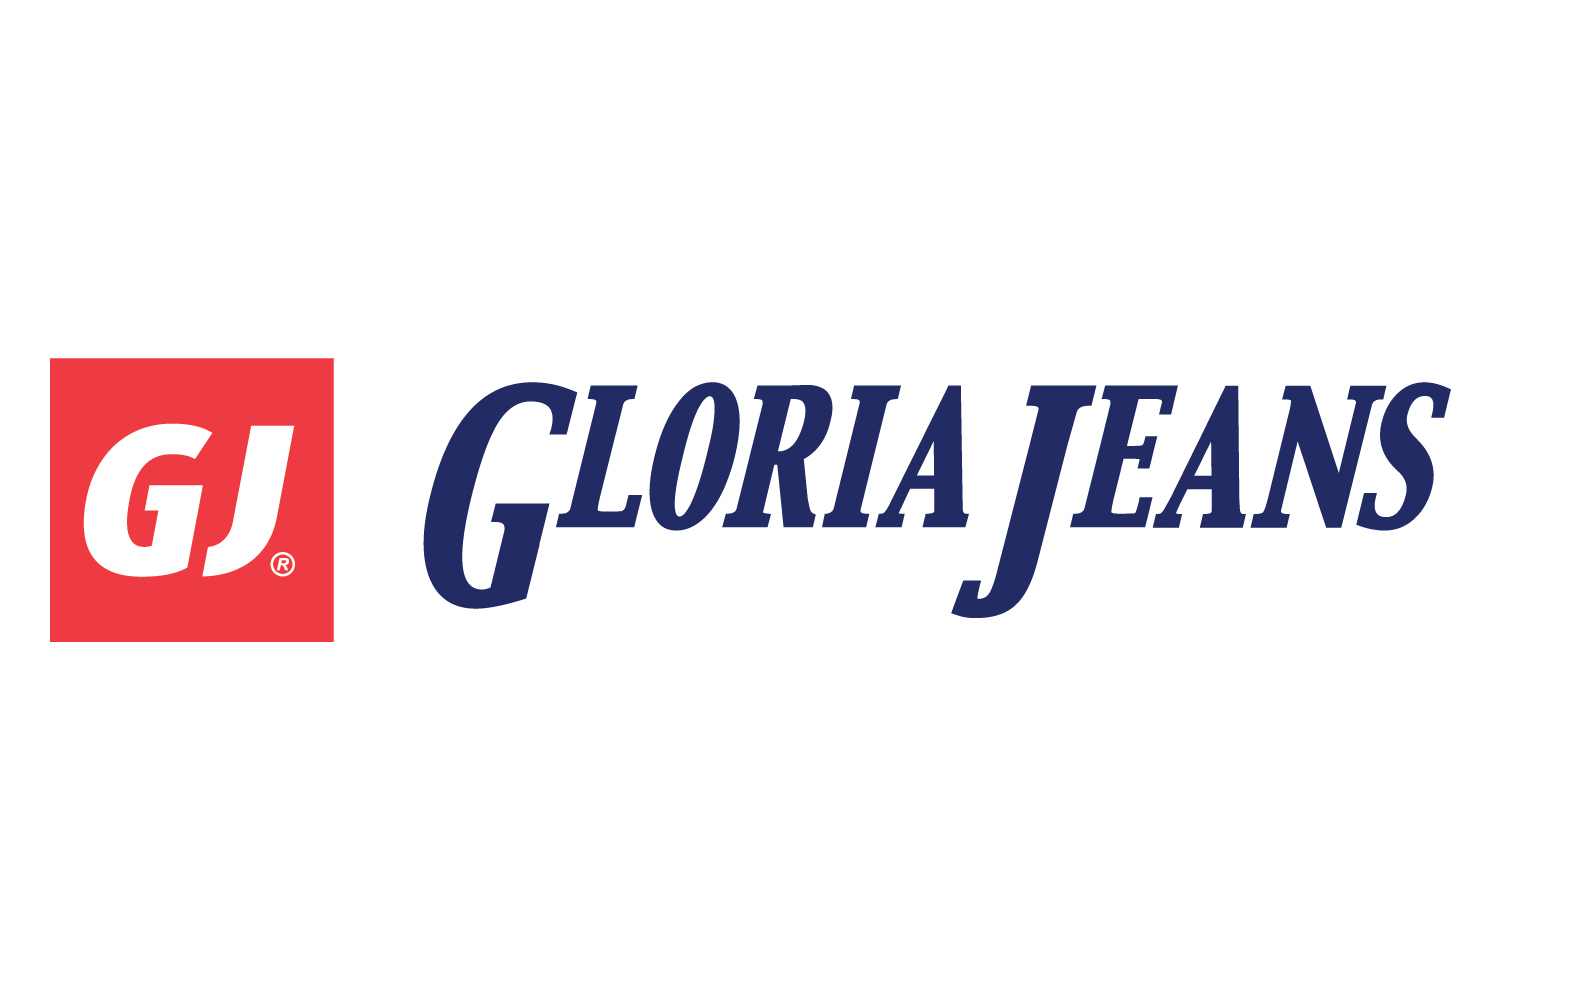  . - 50%!  18.03! Gloria Jeans!  ! ,  , , , !   06/22